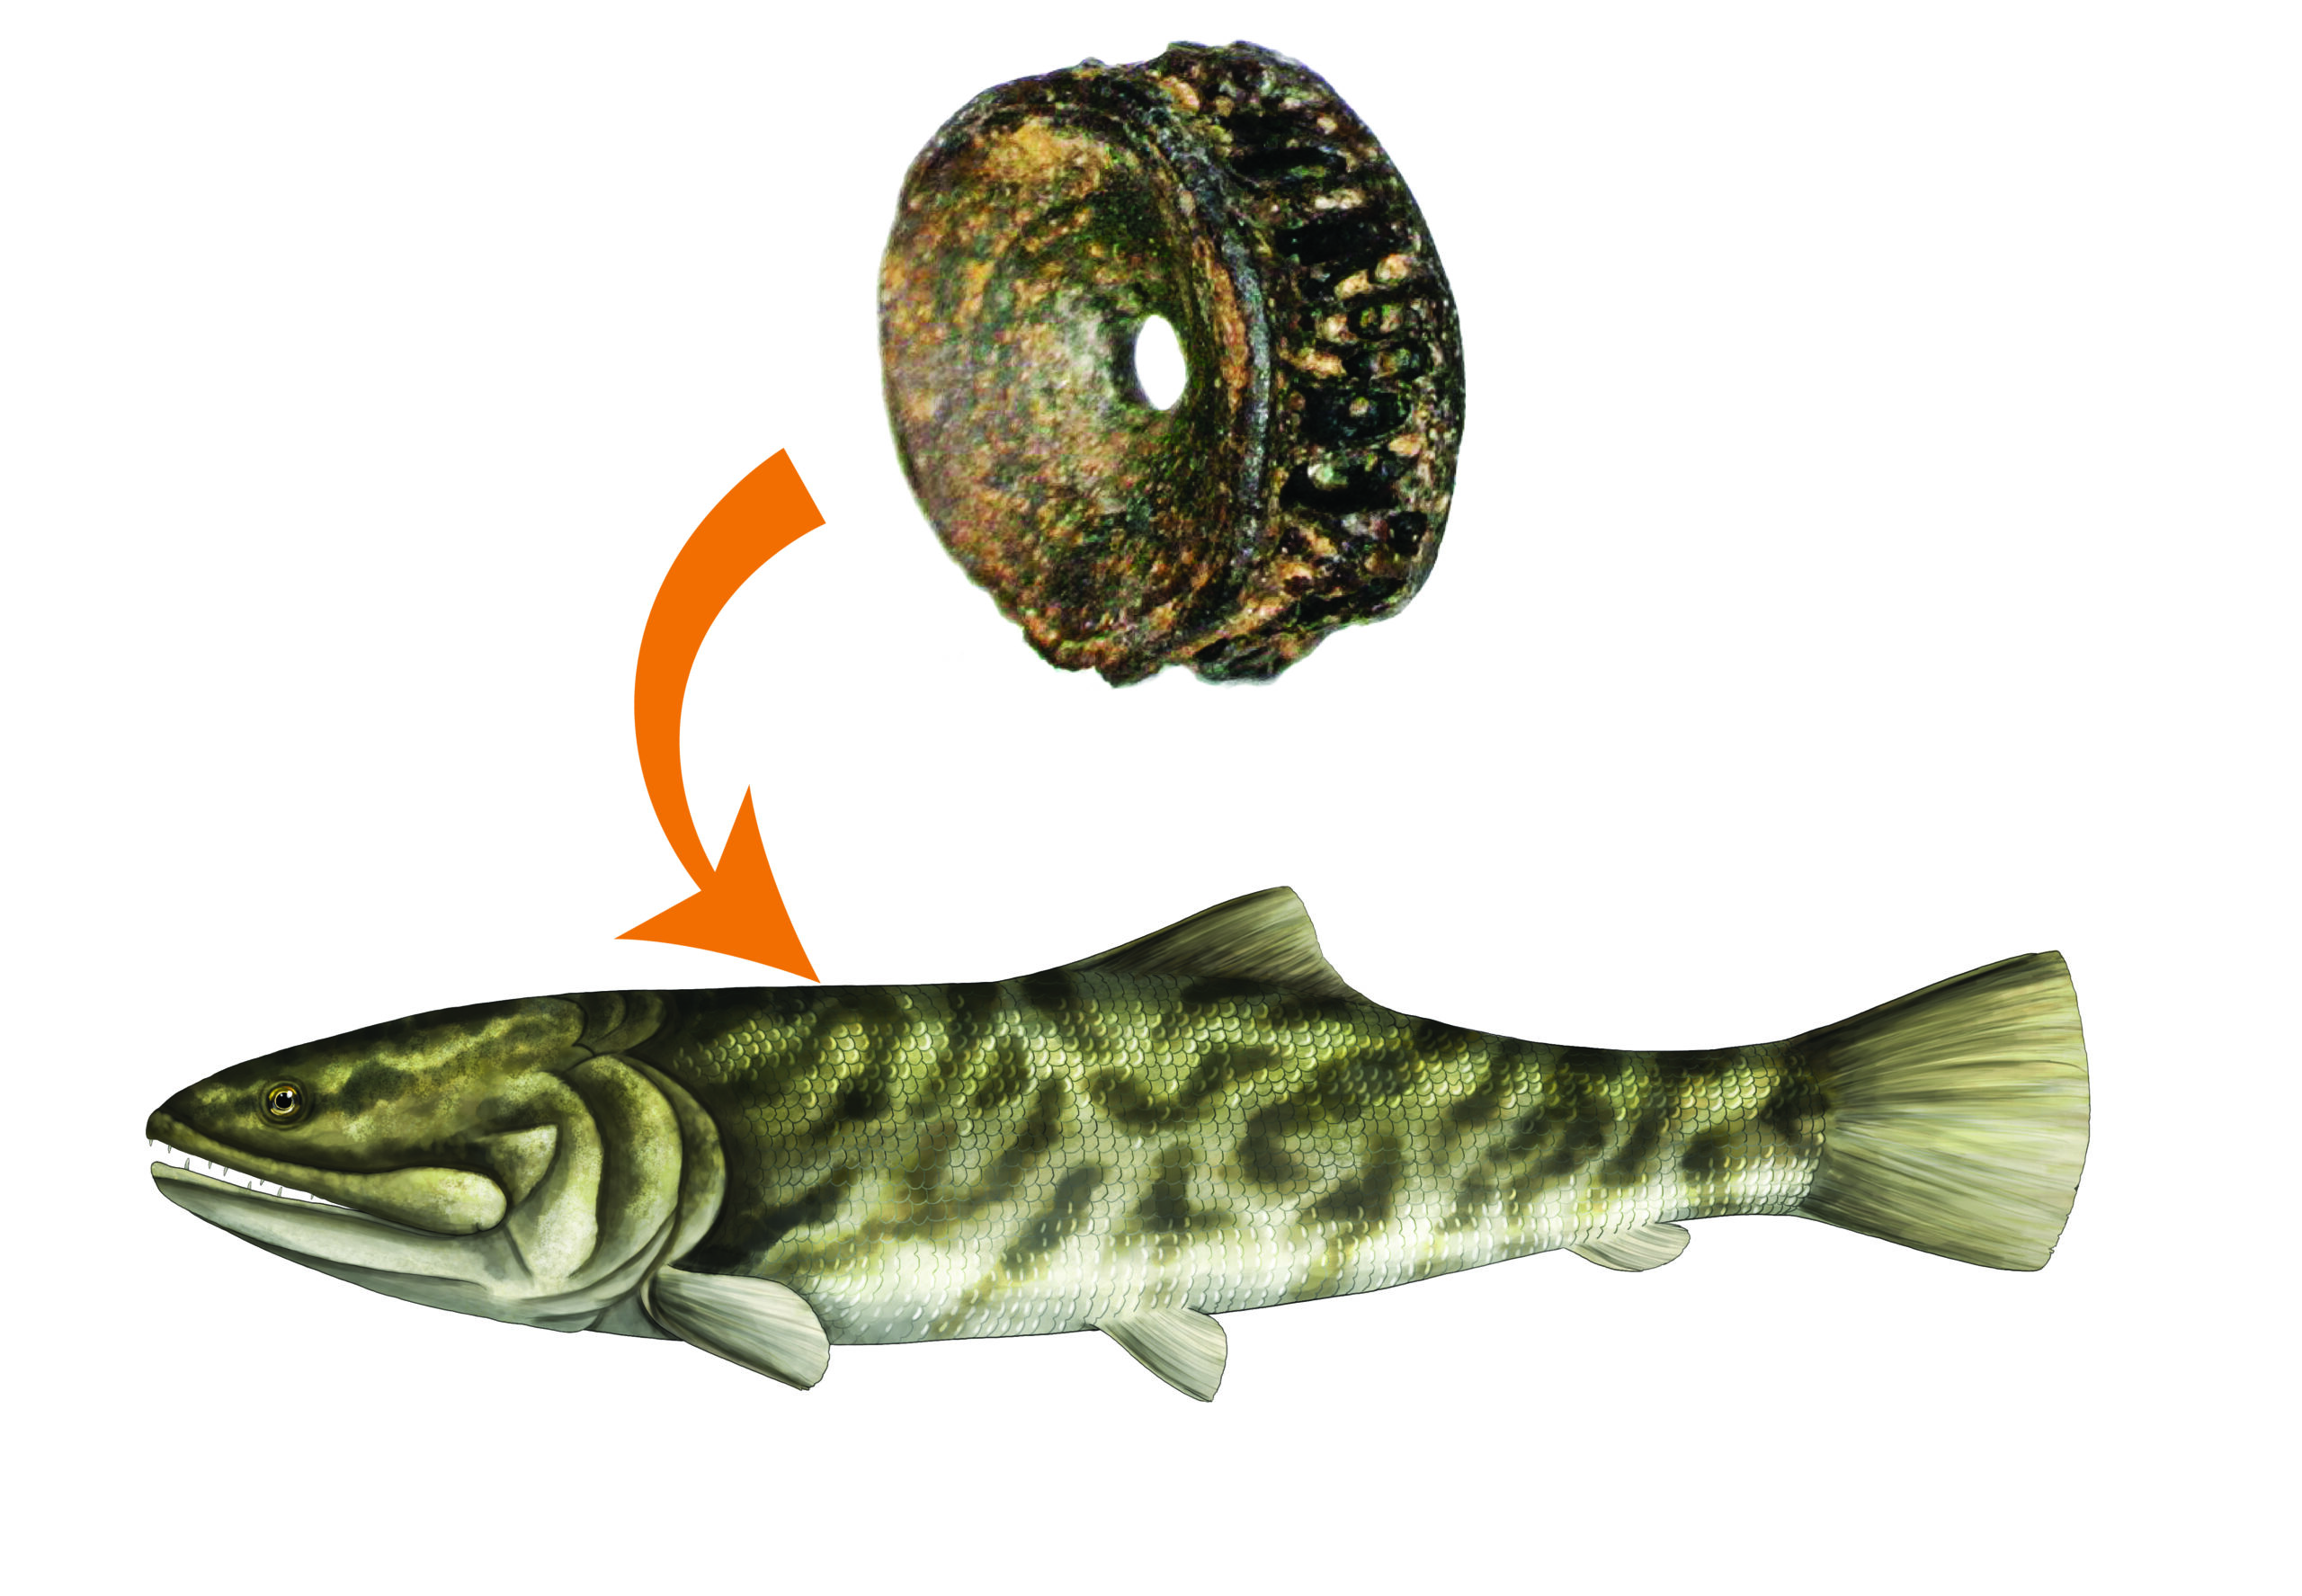 a bony fish vertebra with arrow